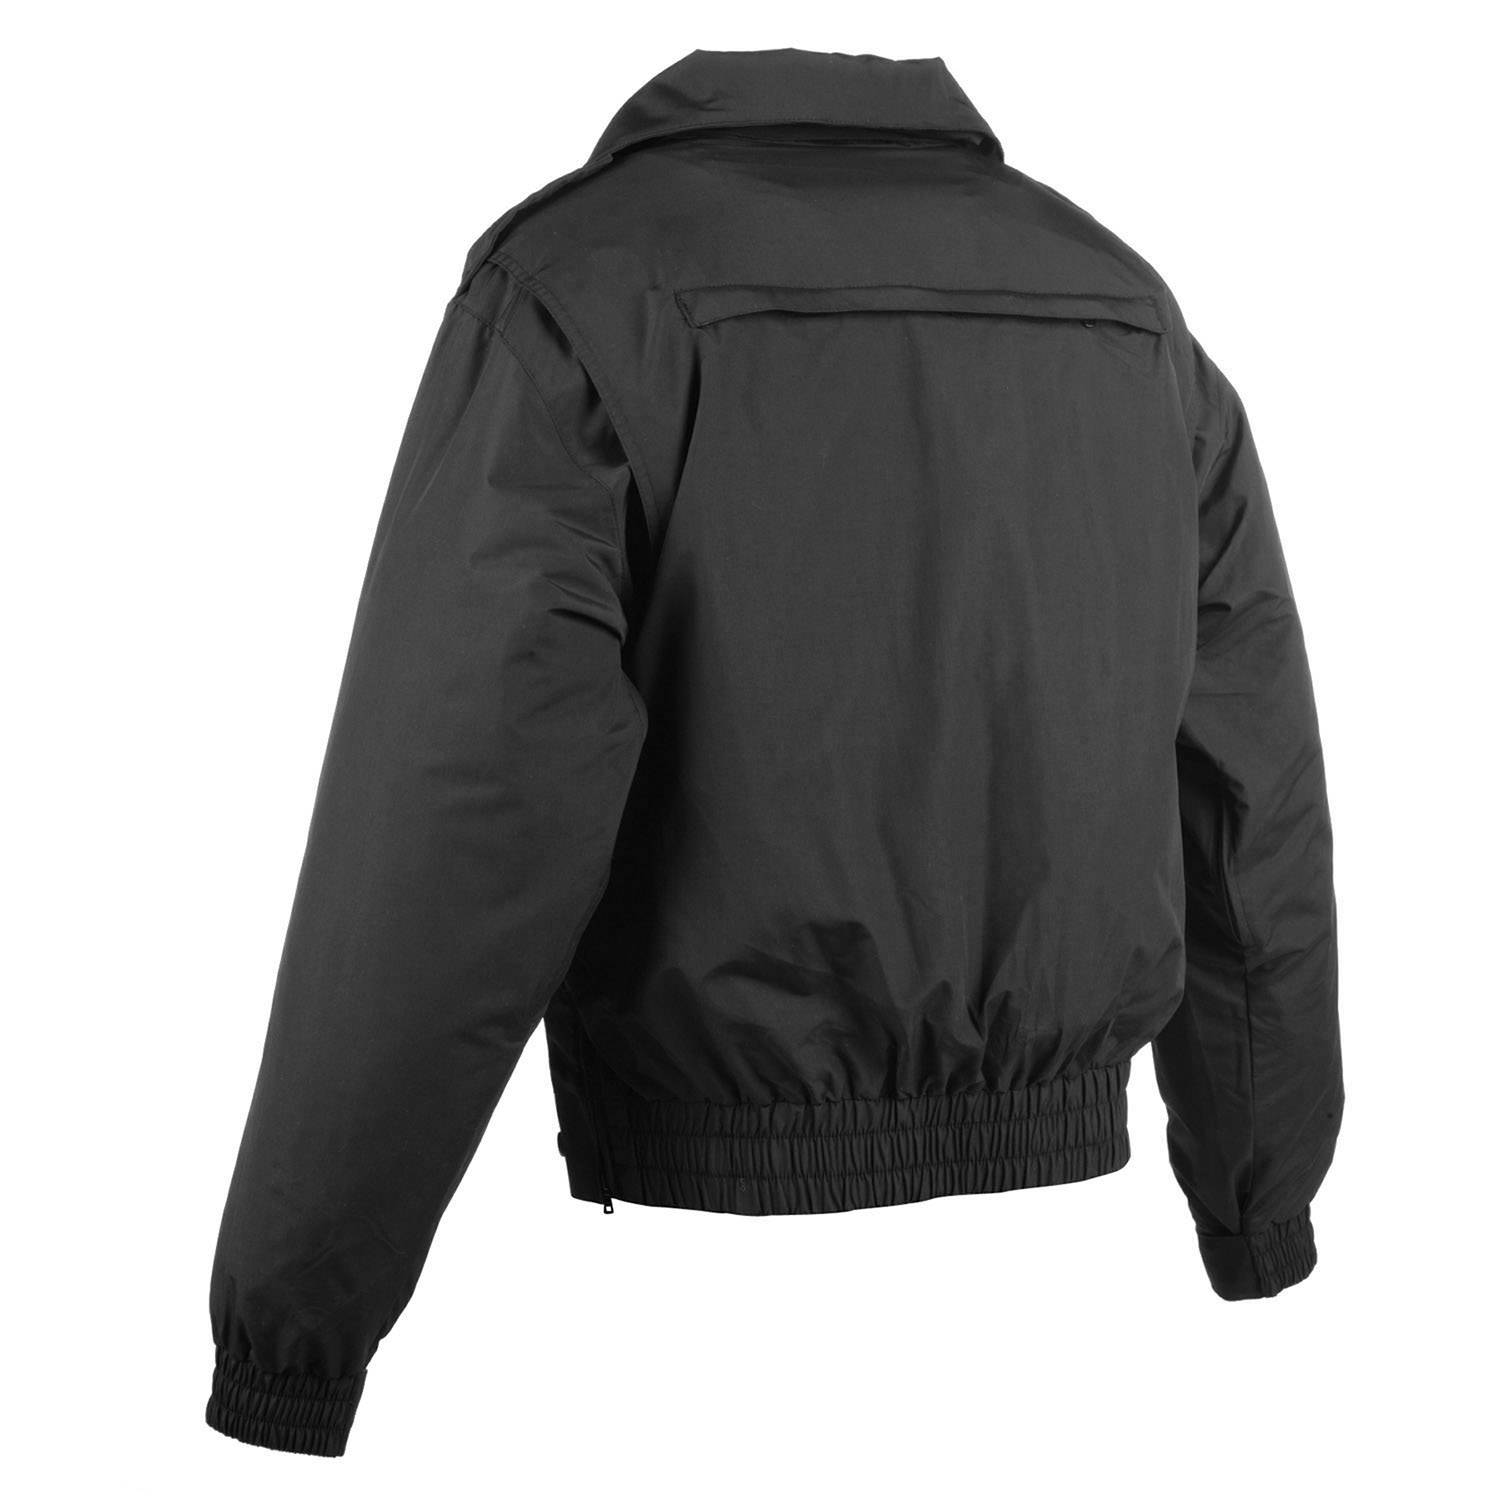 5.11 Tactical Signature Duty Jacket #48103 BLACK FREE SHIPPING NEW